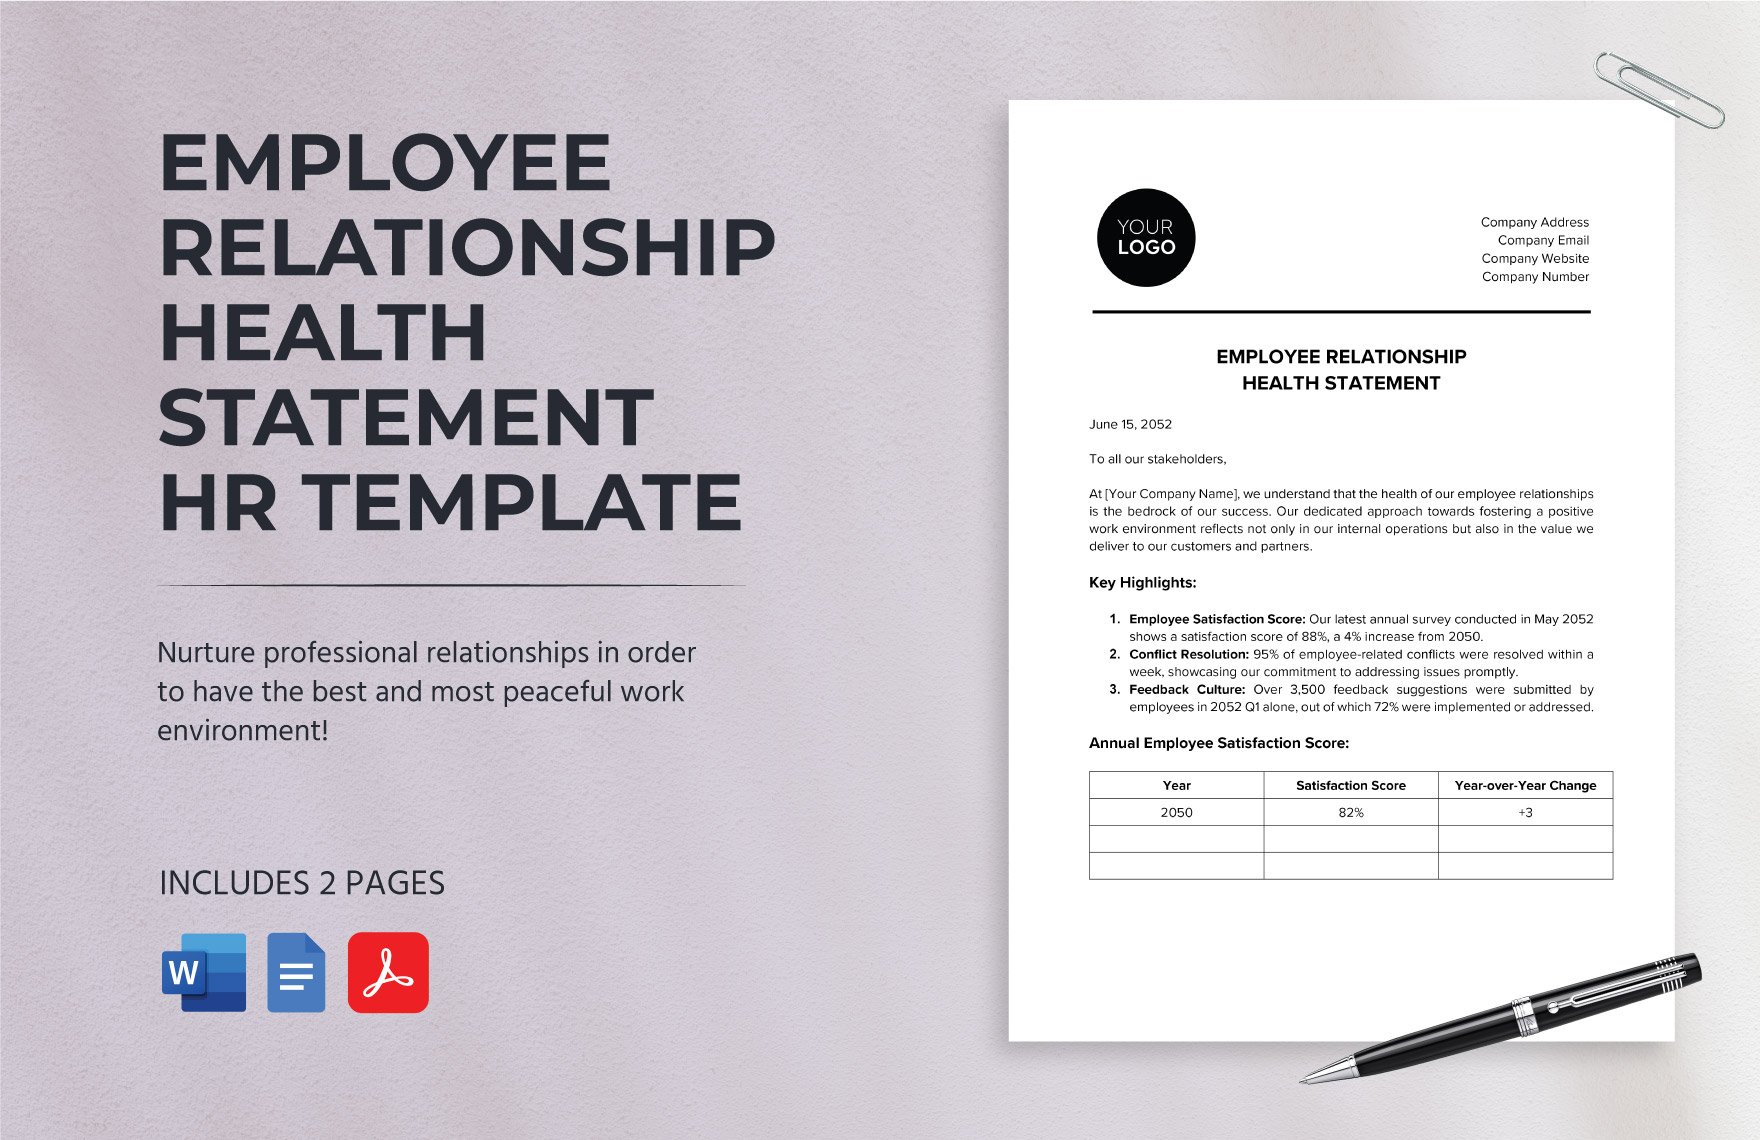 Employee Relationship Health Statement HR Template in Word, Google Docs, PDF